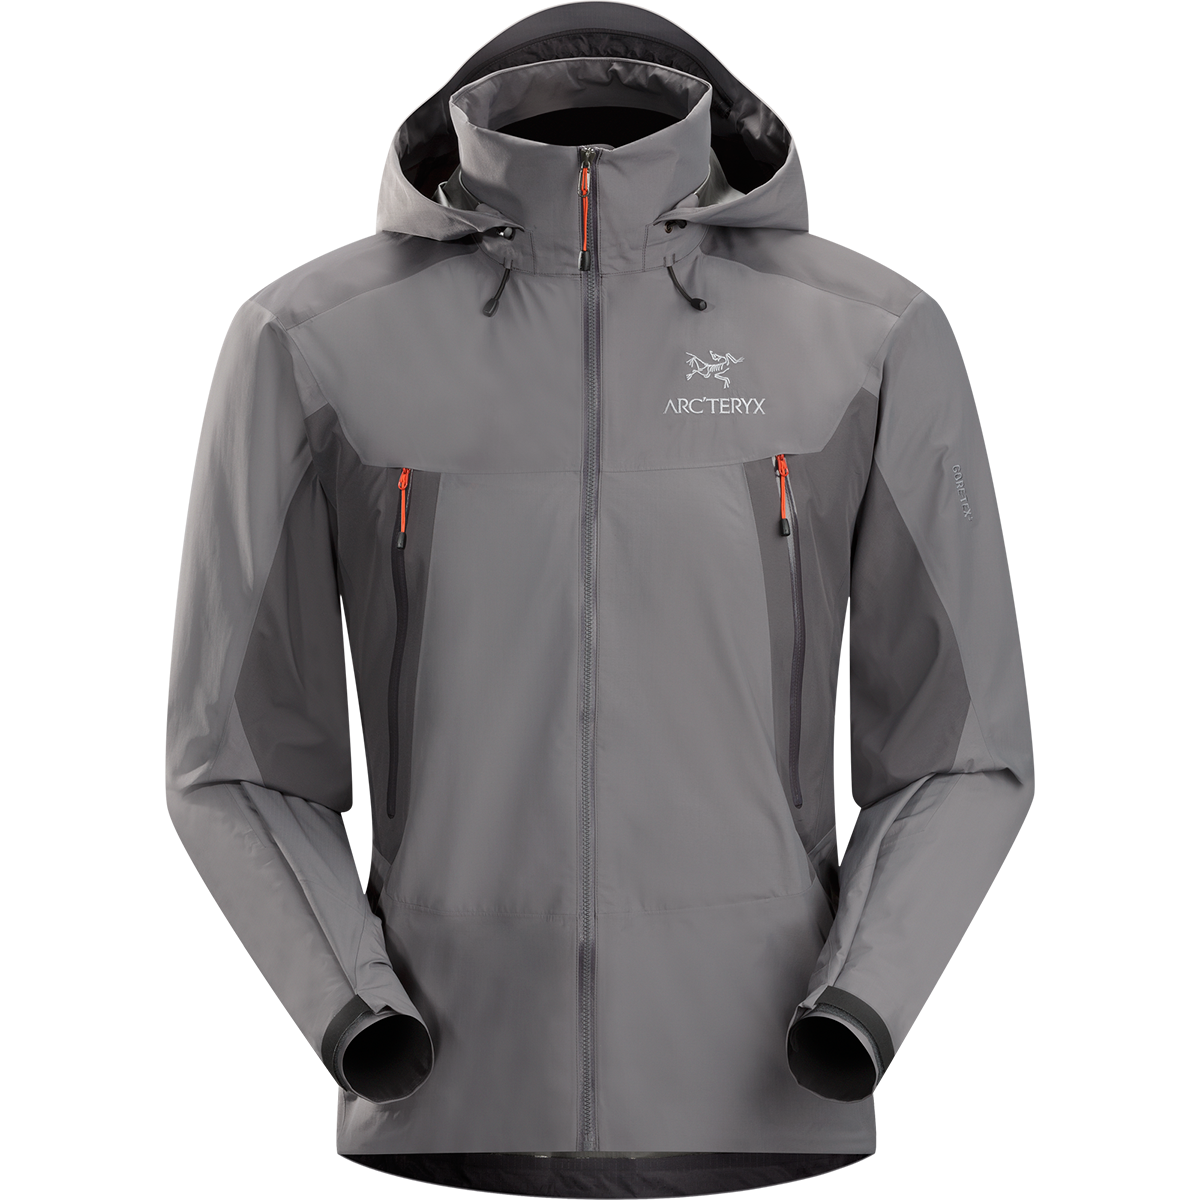 Beta LT Hybrid Jacket, men's, discontinued Fall 2015 colors